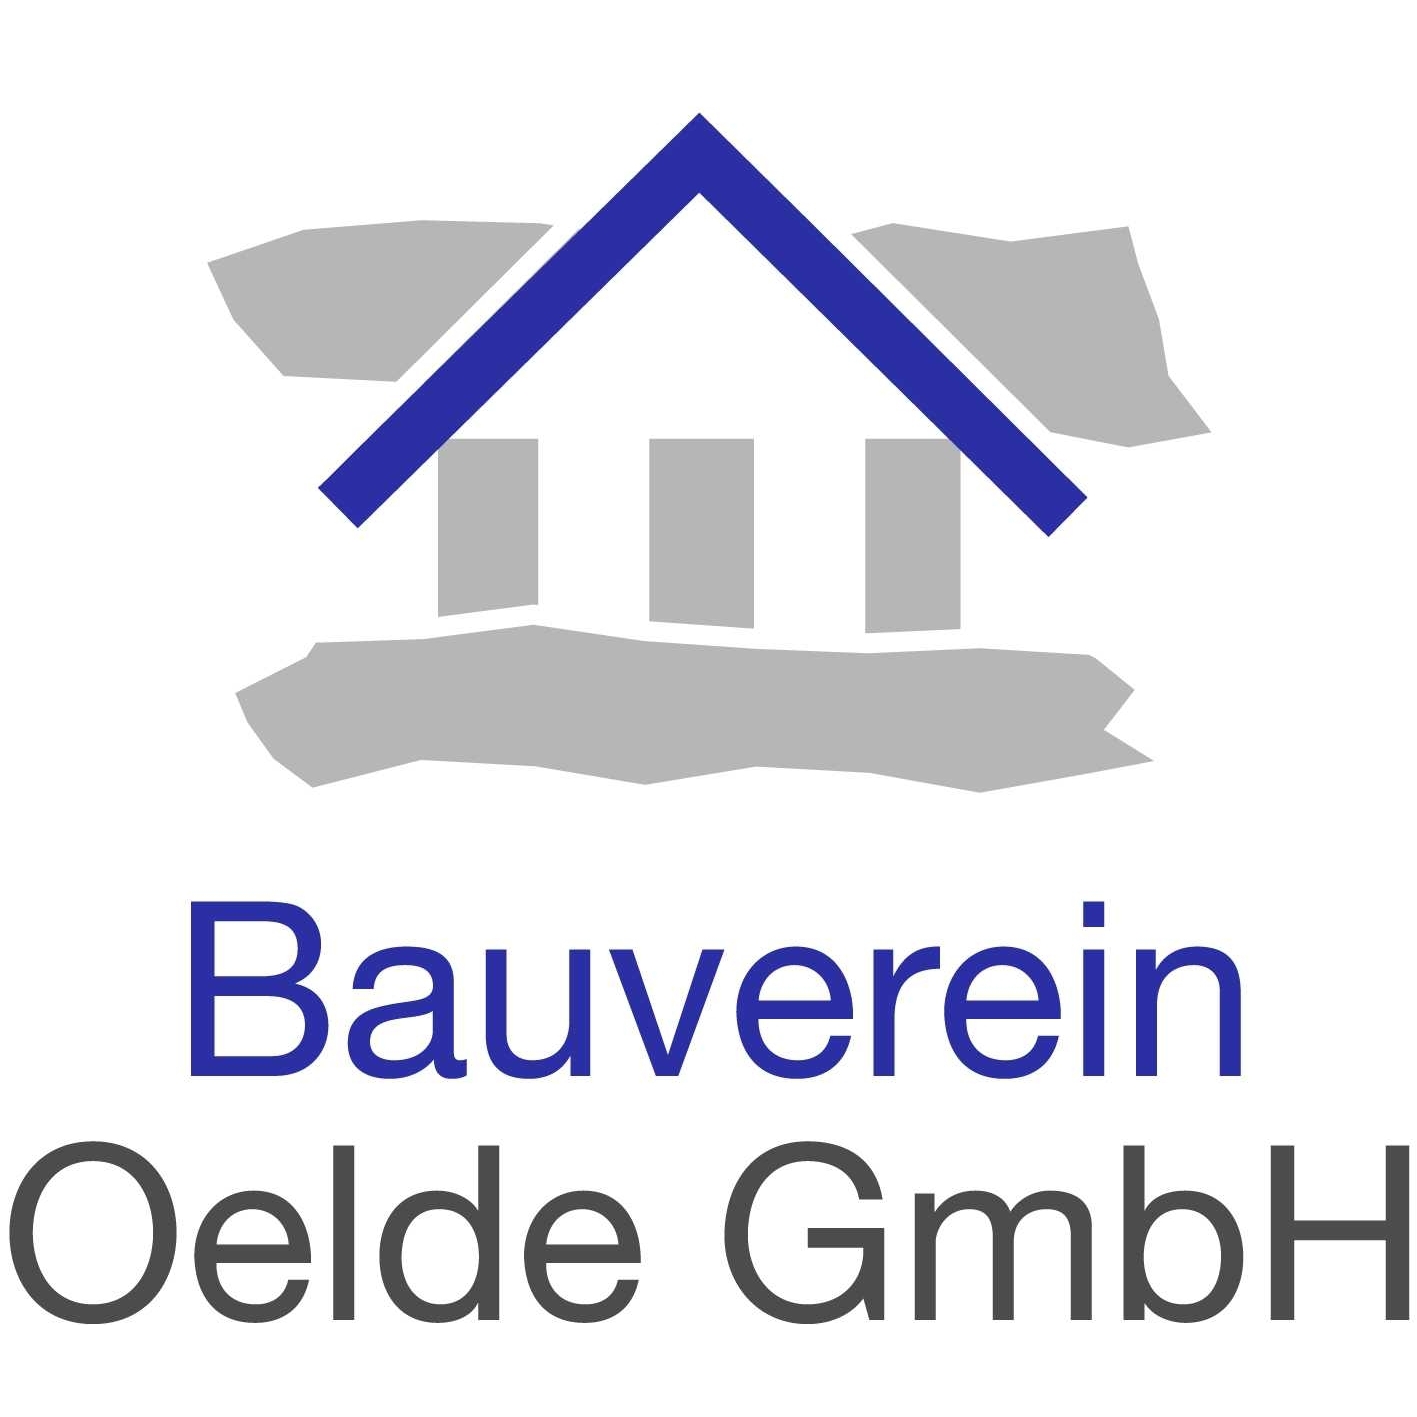 Bauverein Oelde GmbH Logo